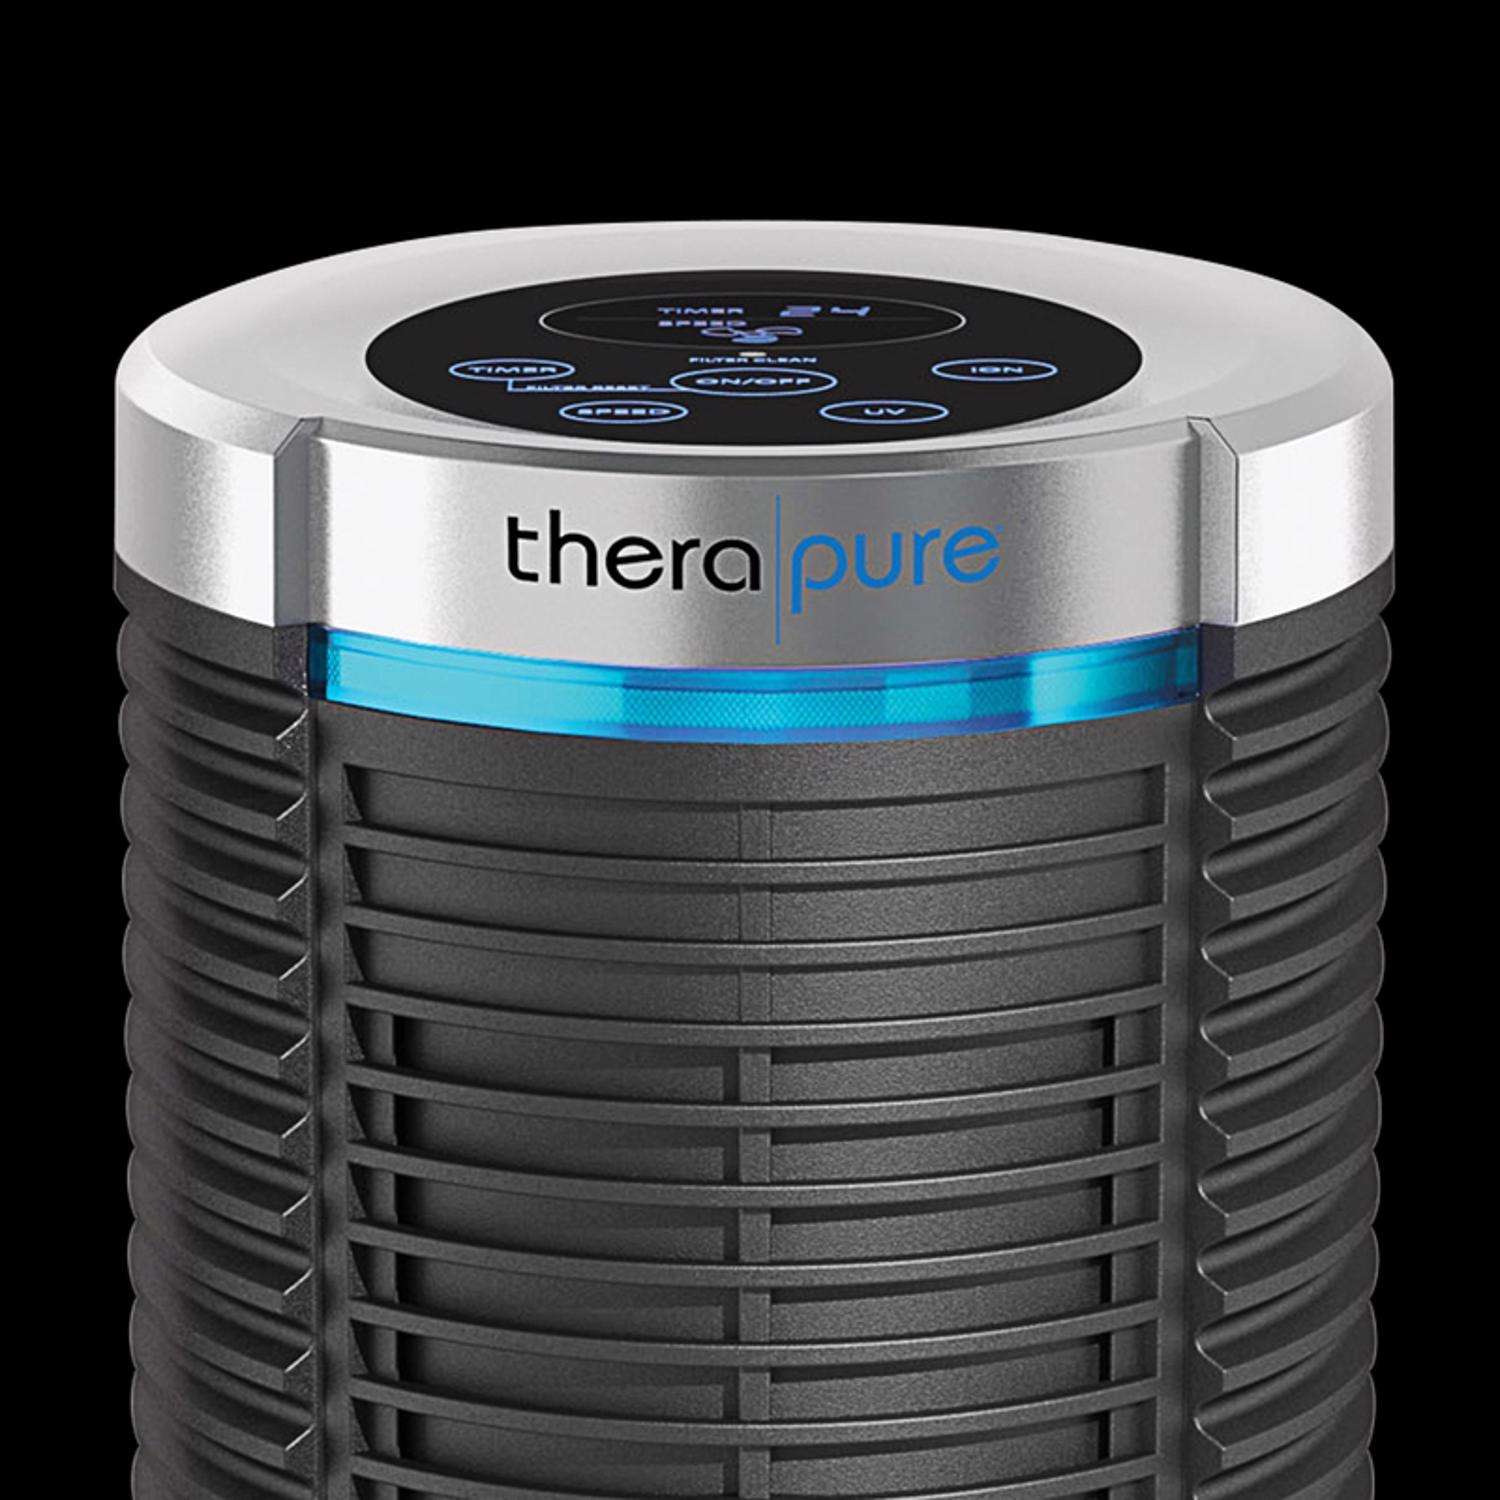 Temp-A-Sure Review: Breathe Pure's Digital Thermometer Temperature